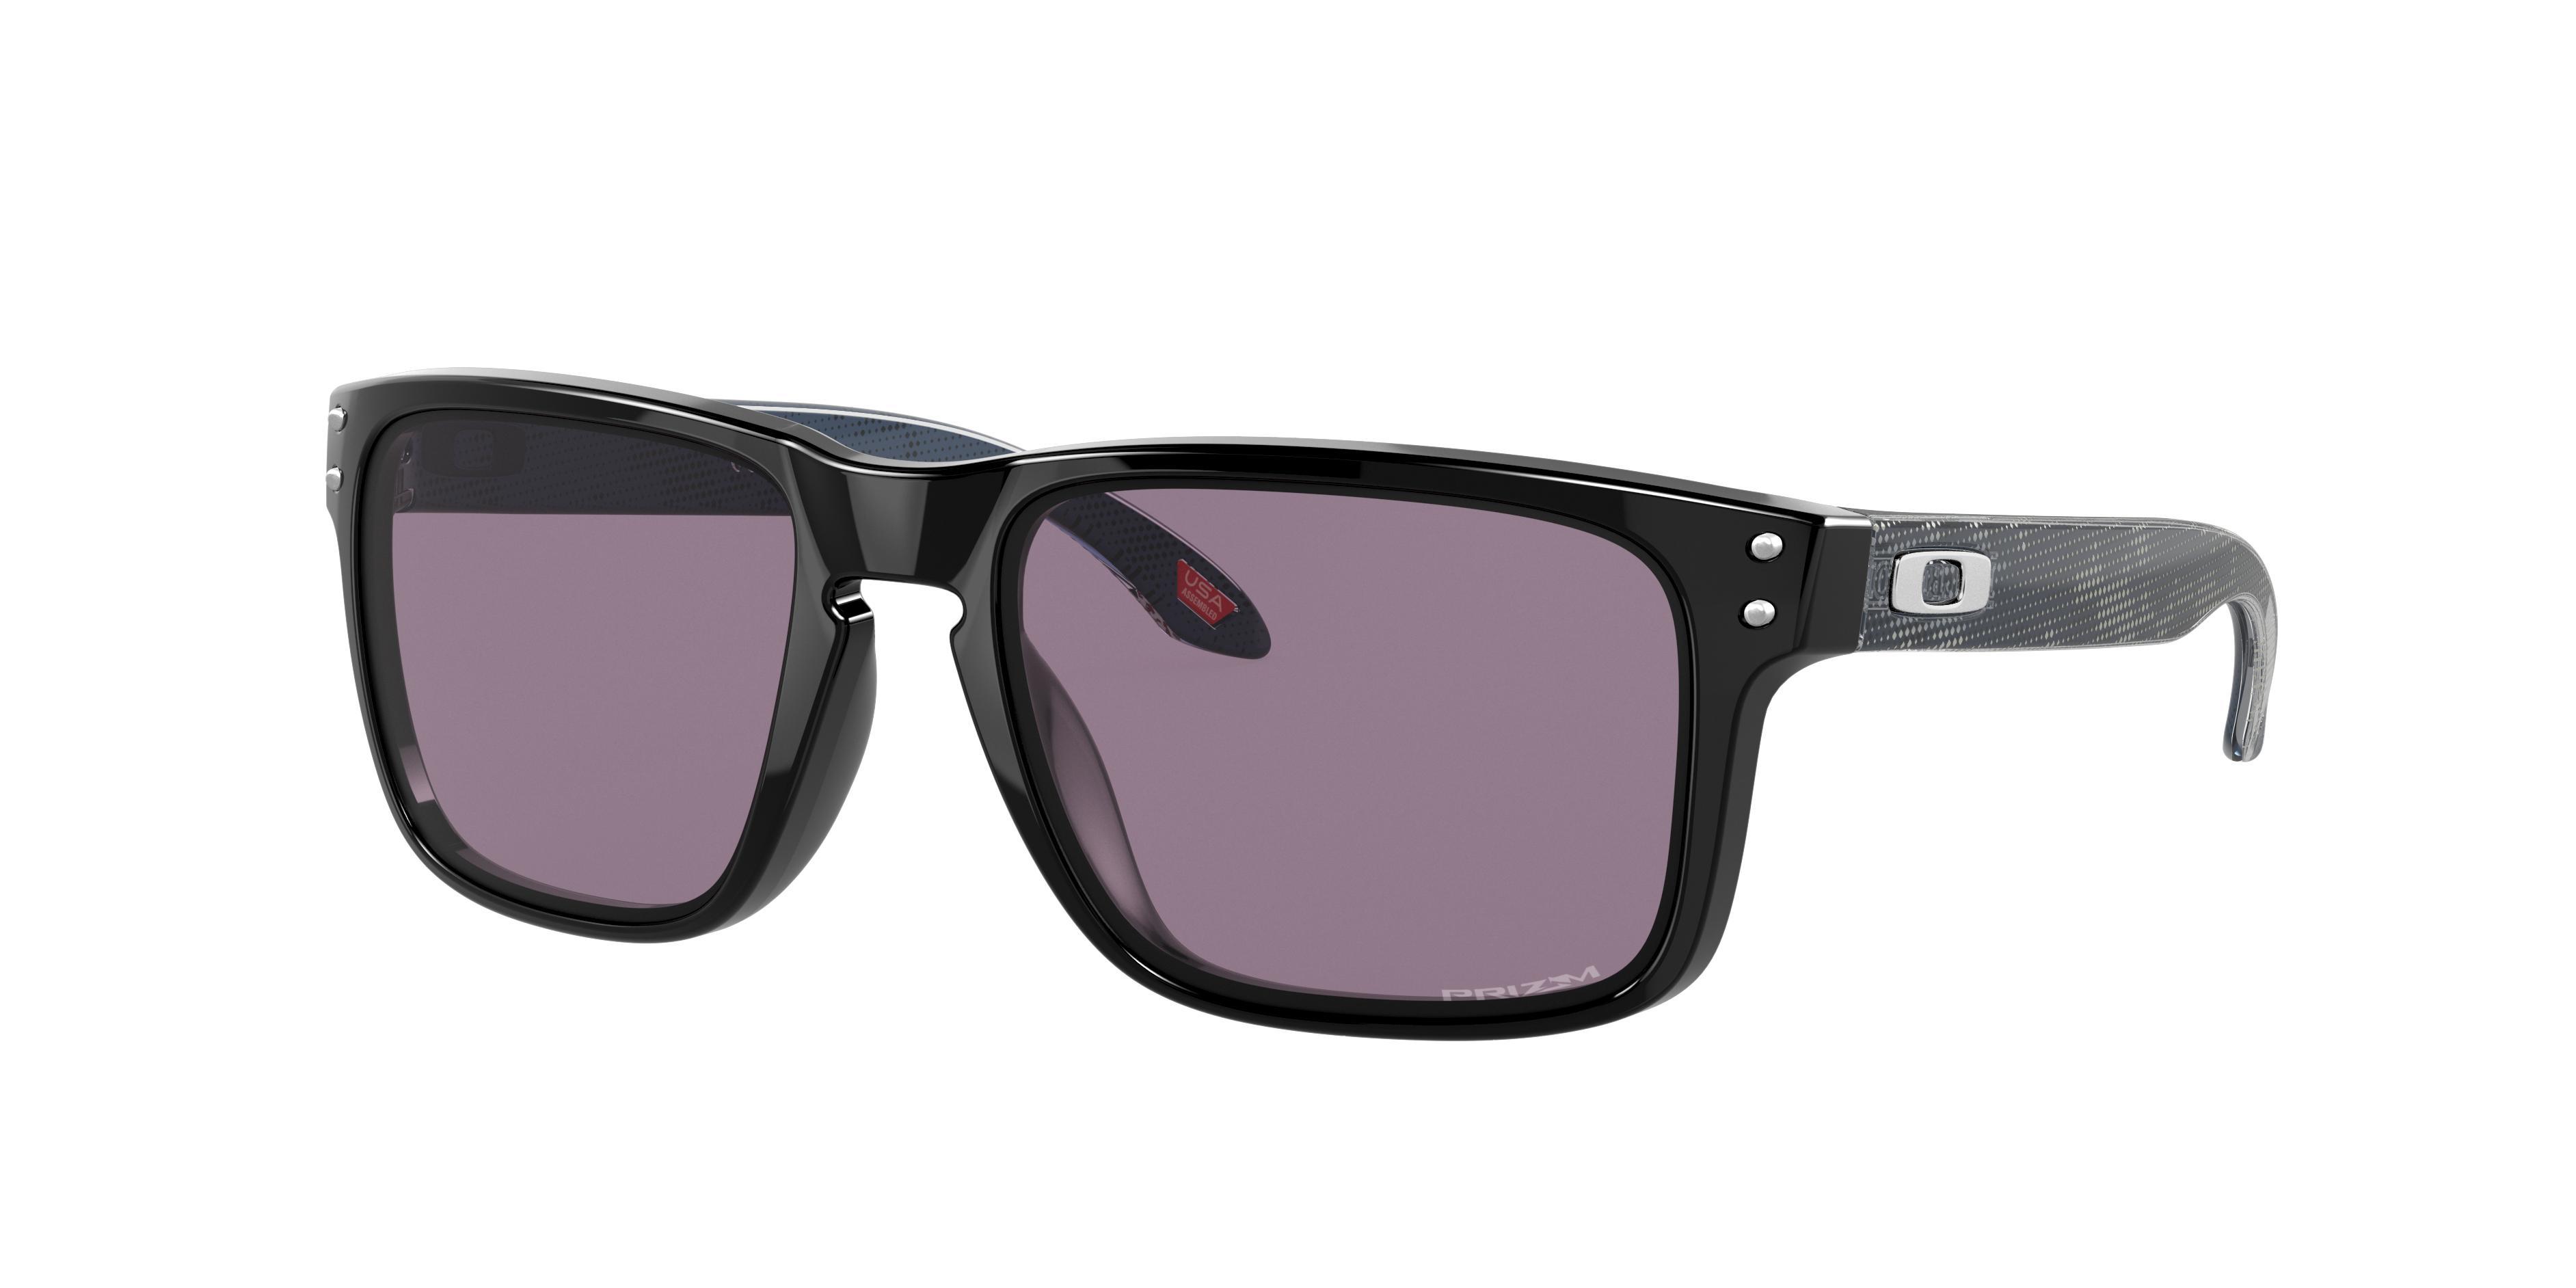 Oakley Holbrook 57mm Sunglasses Product Image